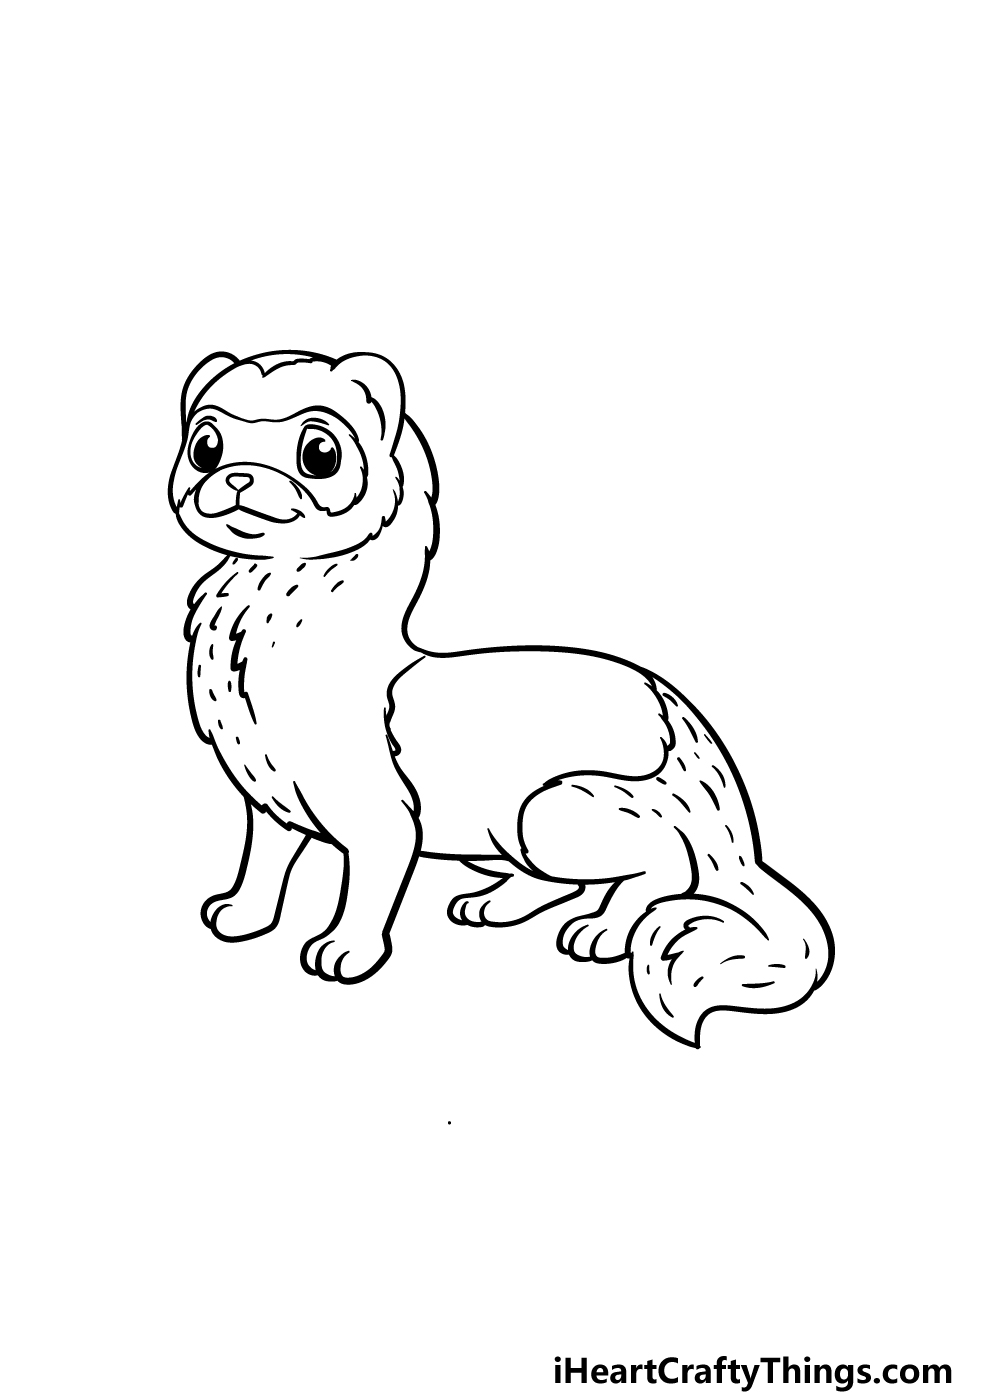 Ferret drawing